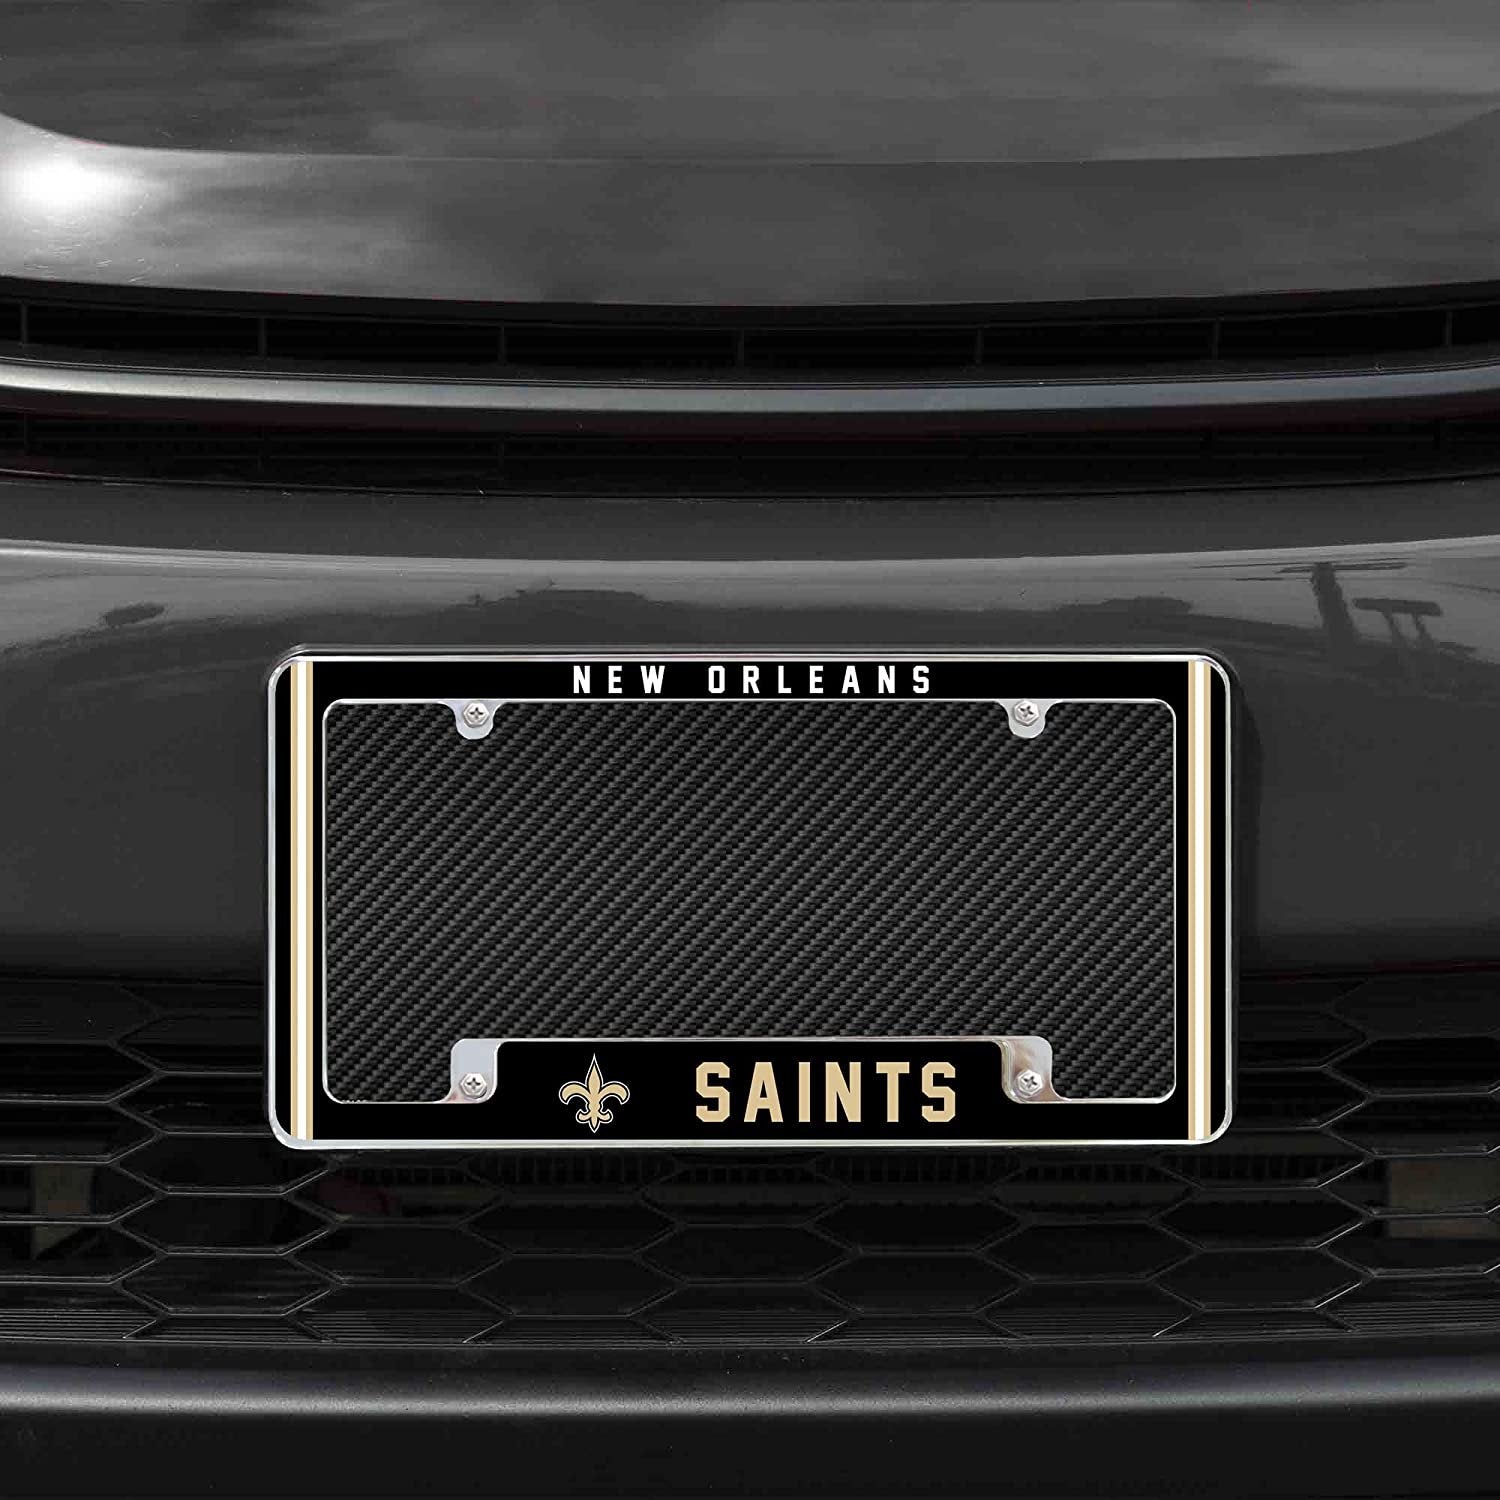 New Orleans Saints Metal License Plate Frame Chrome Tag Cover Alternate Design 6x12 Inch